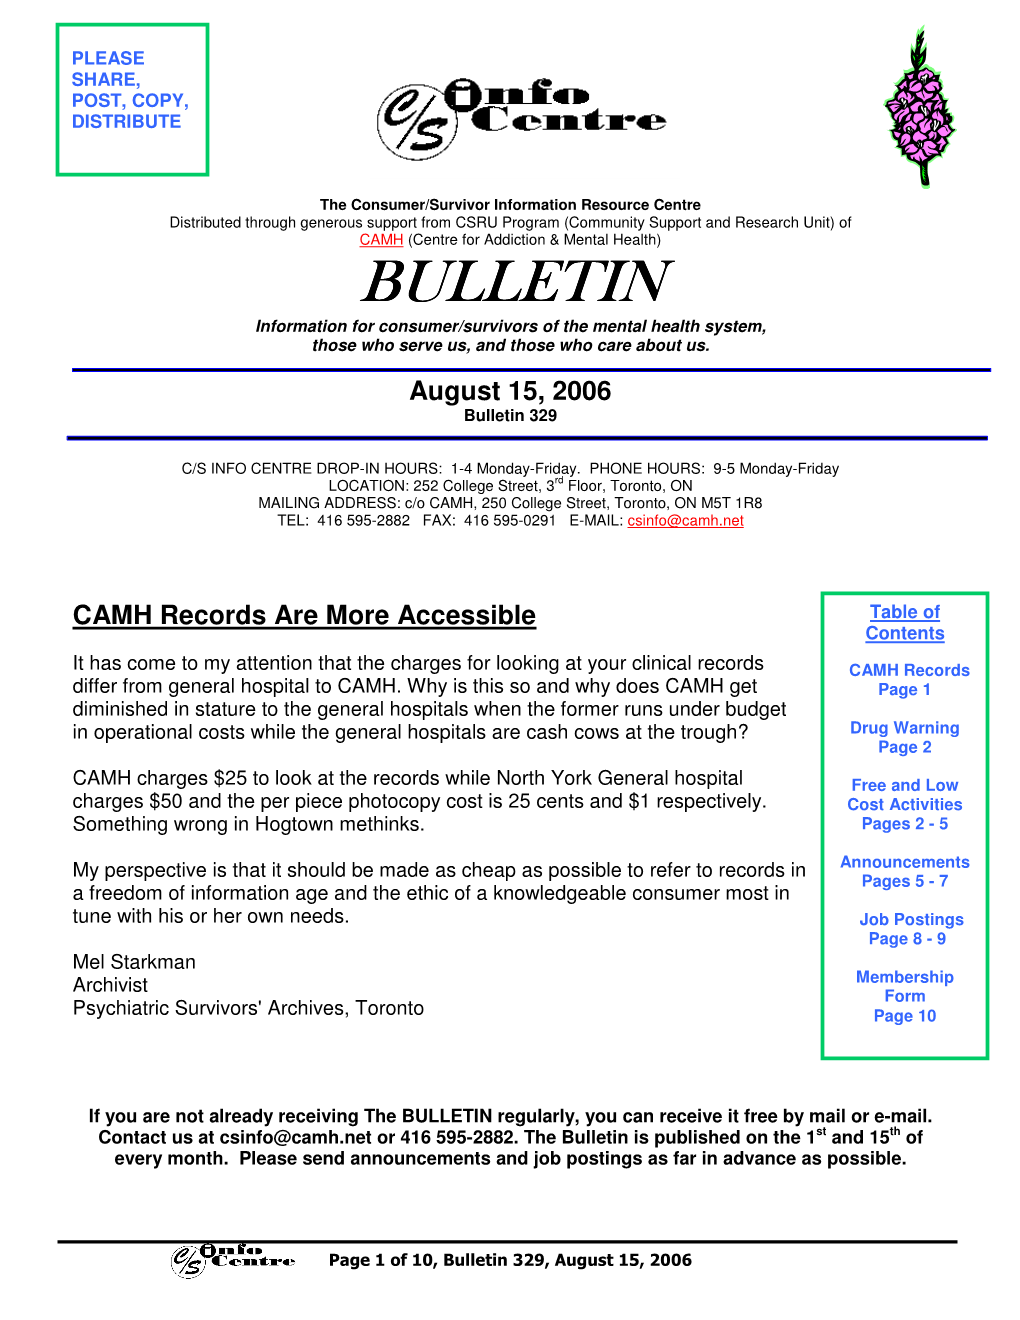 August 15, 2006 Bulletin 329